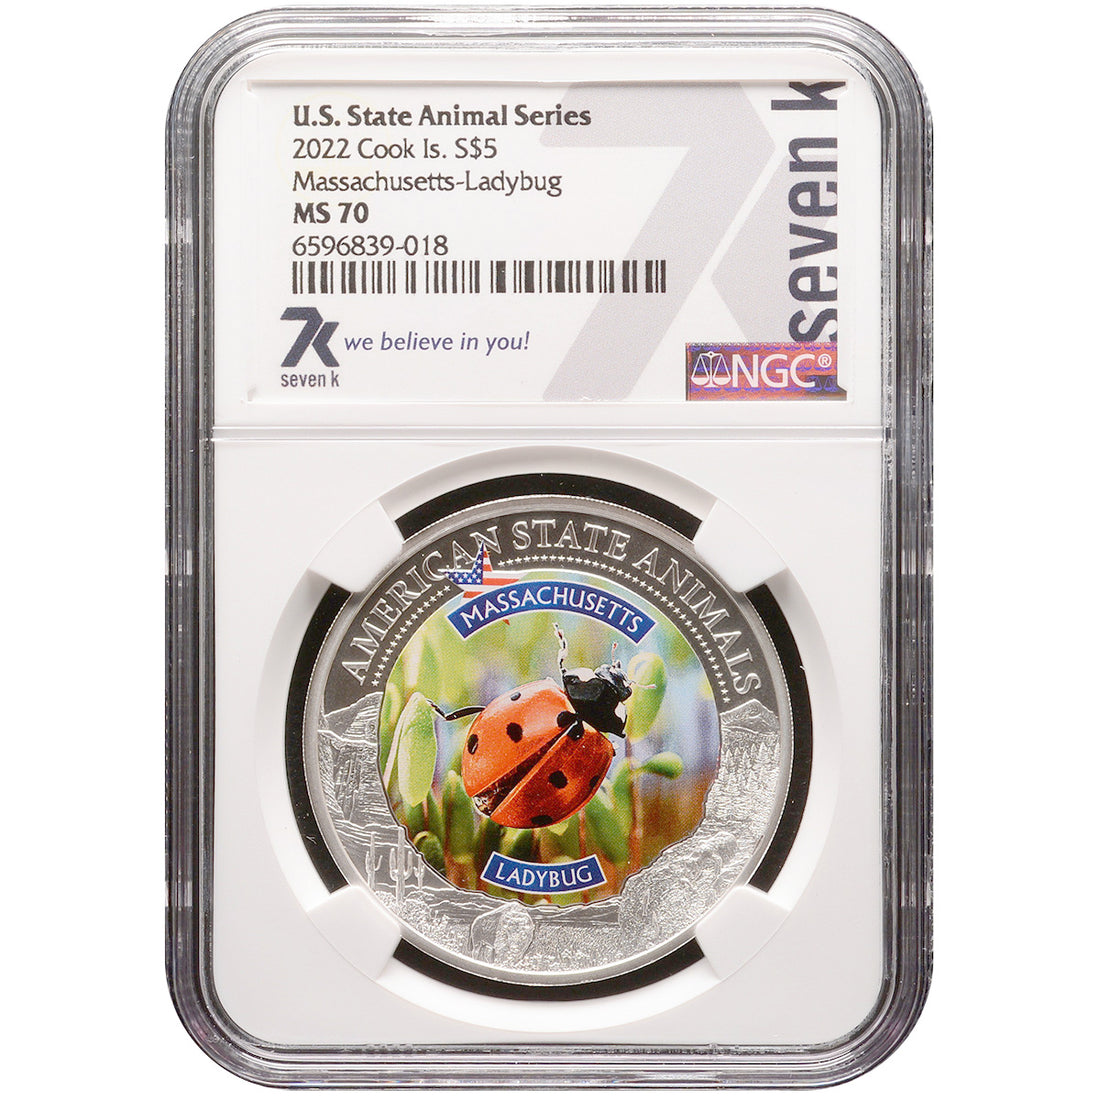 2022 Cook Islands Massachusetts Ladybug MS70 U.S. State Animal Series 1 Oz Silver Coin - OZB